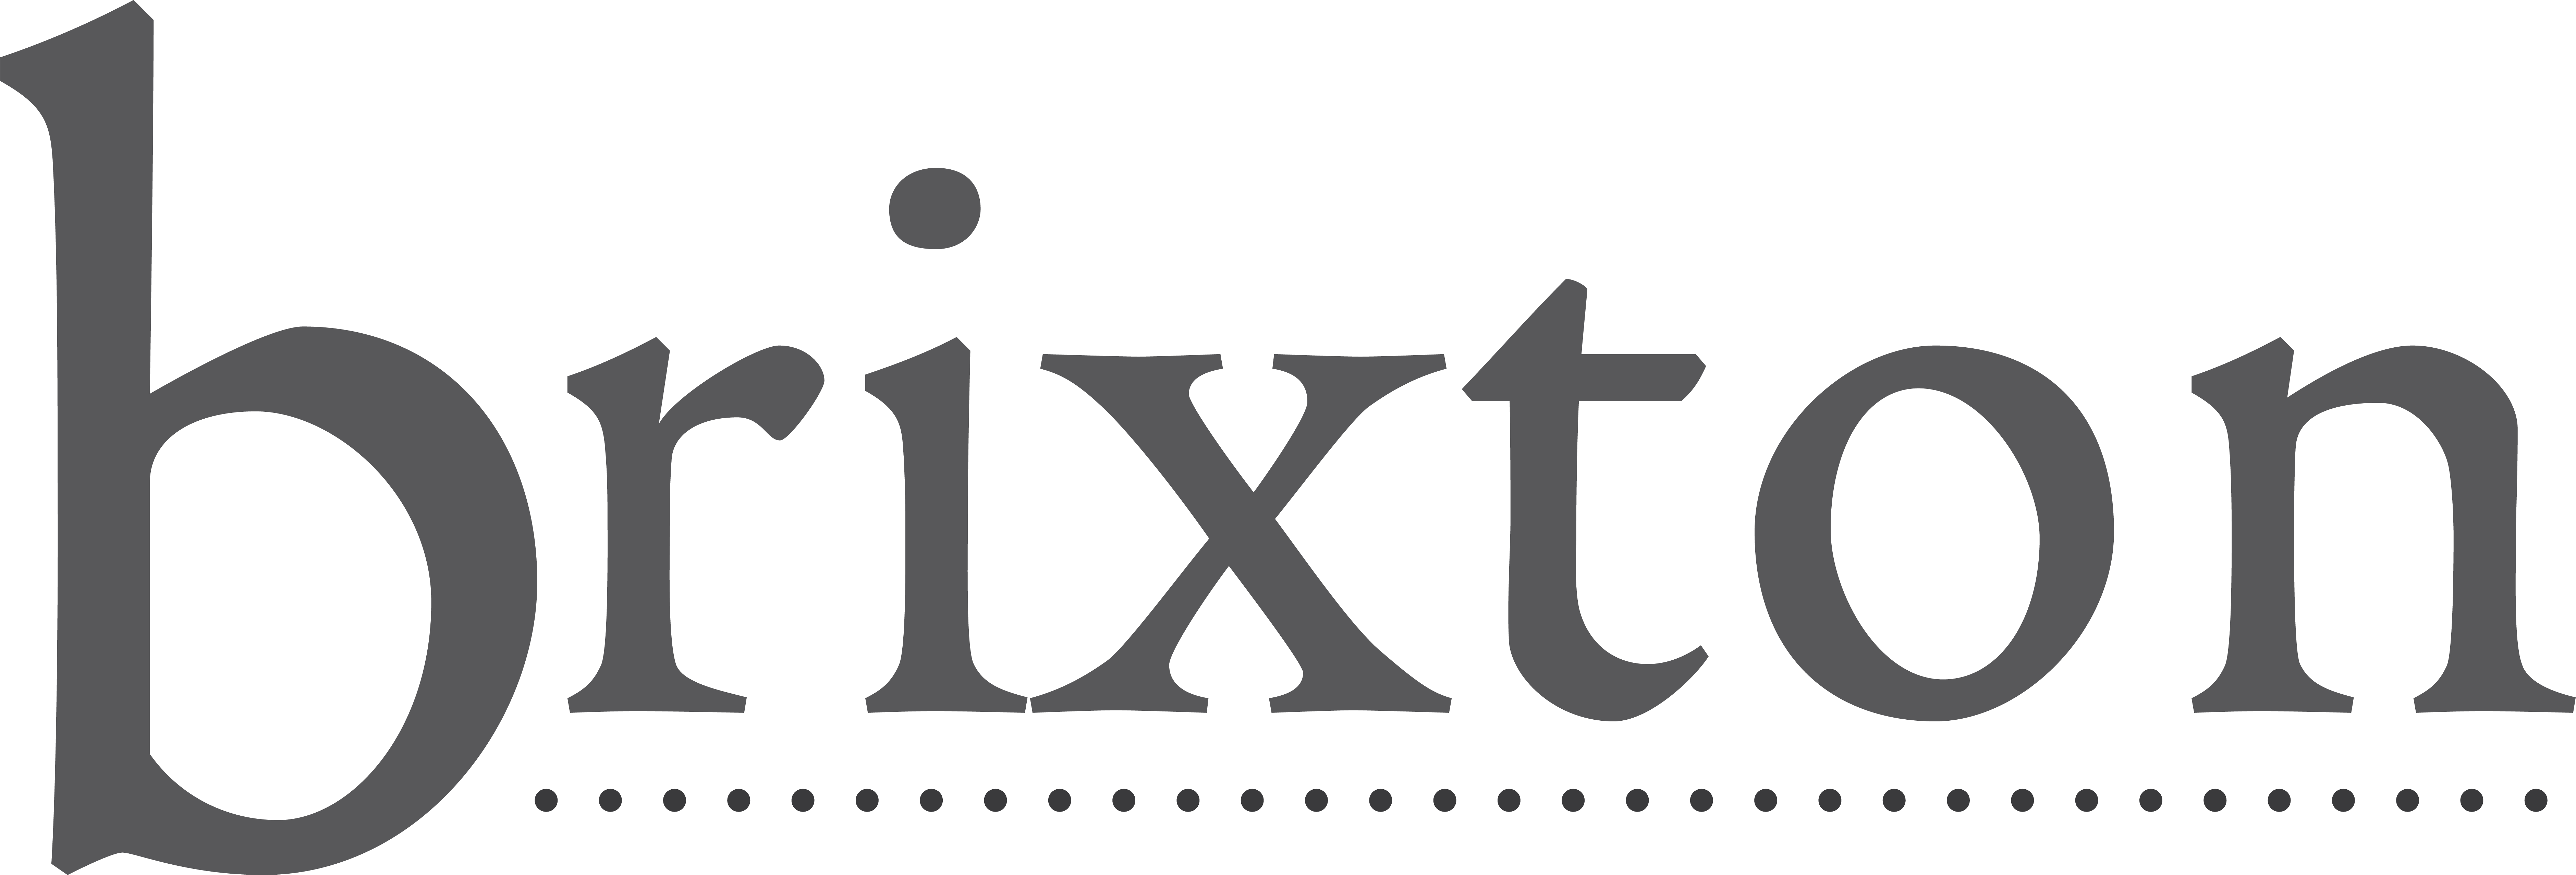 Brixton Logo